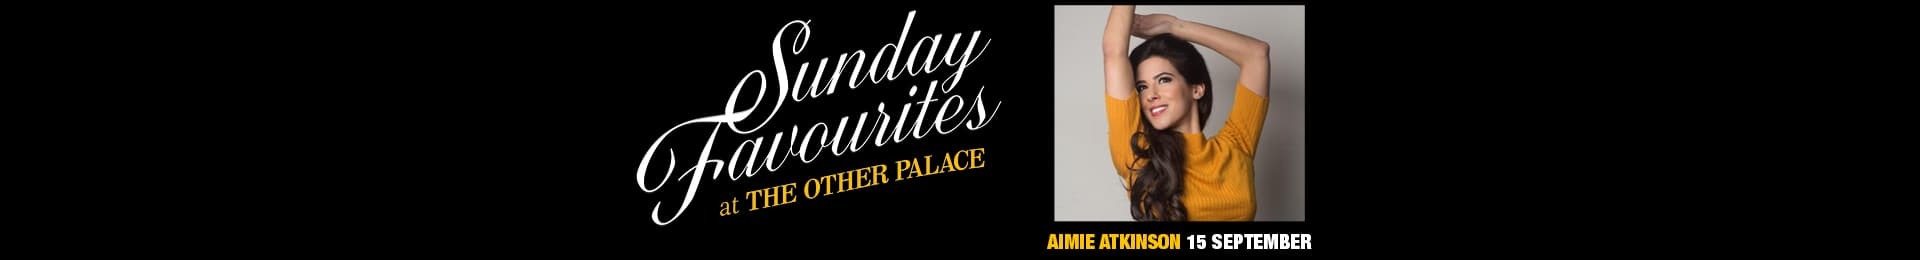 Sunday Favourites: Aimie Atkinson banner image